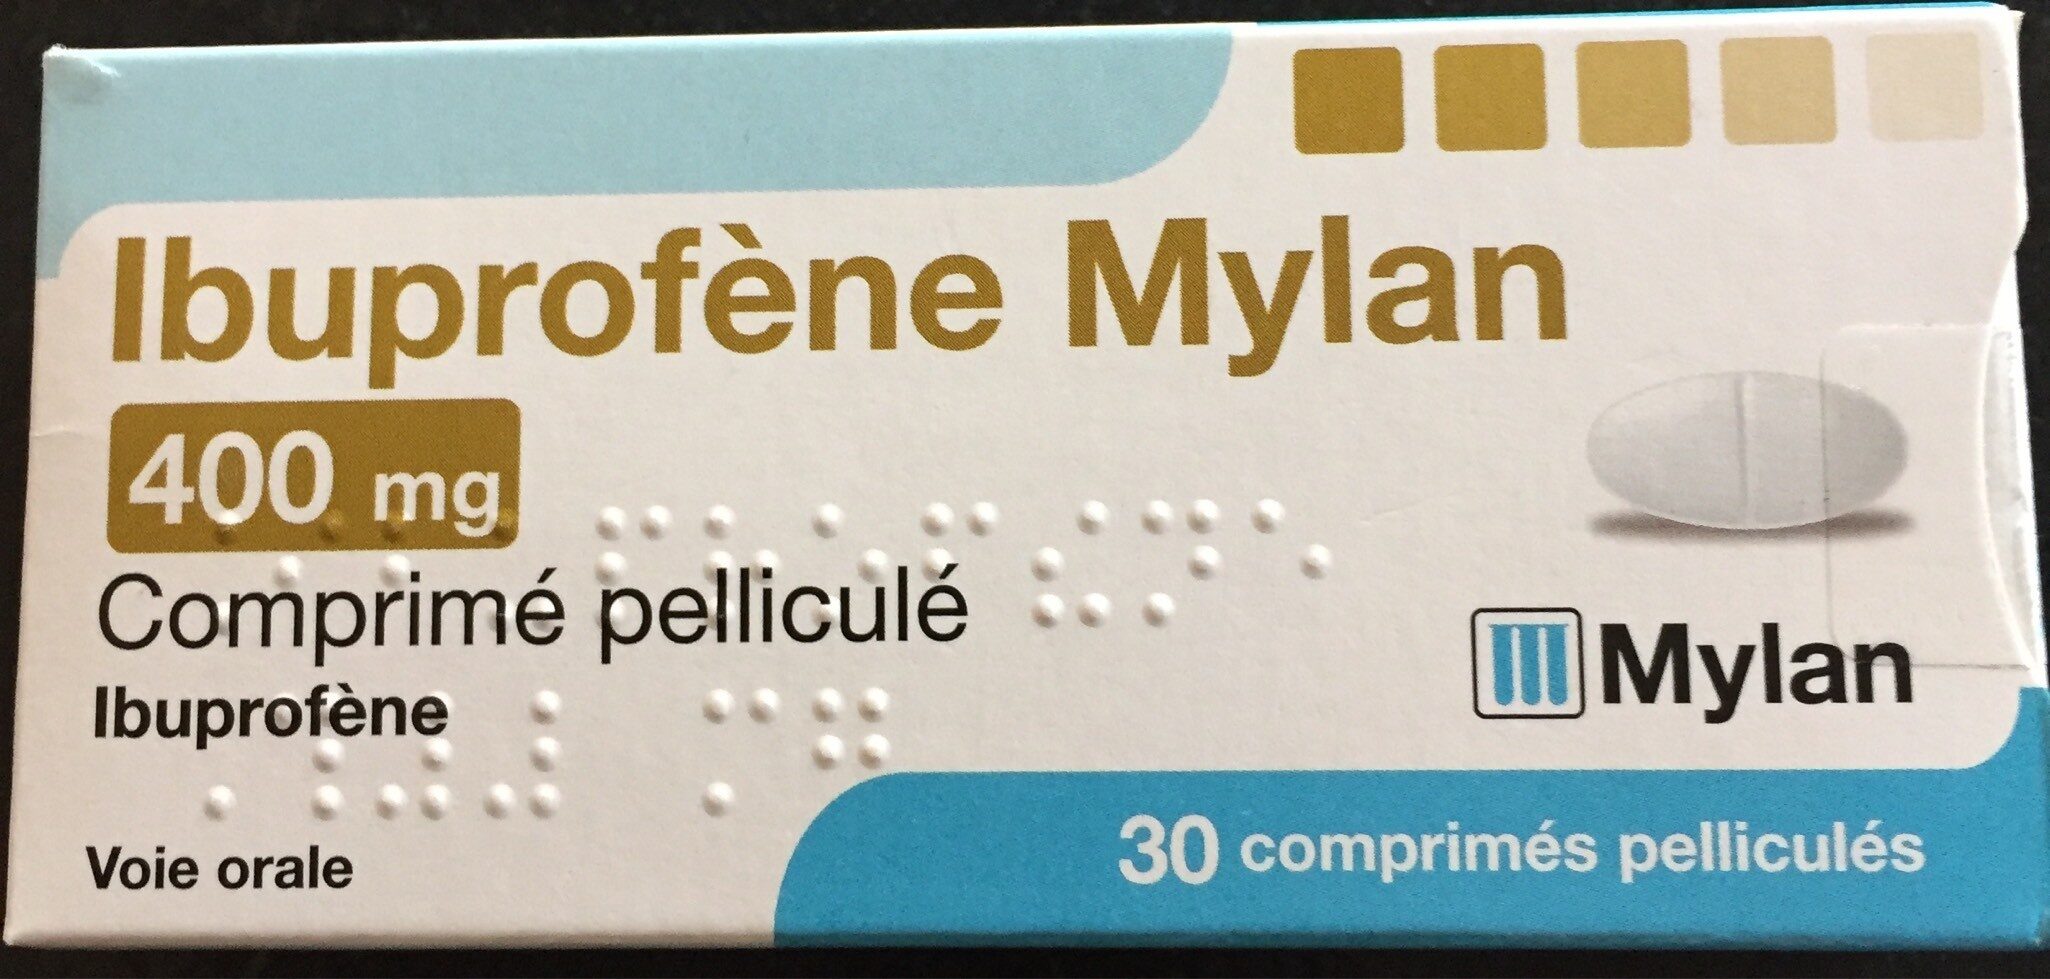 Ibuprofène Mylan 400 mg - Produit - fr